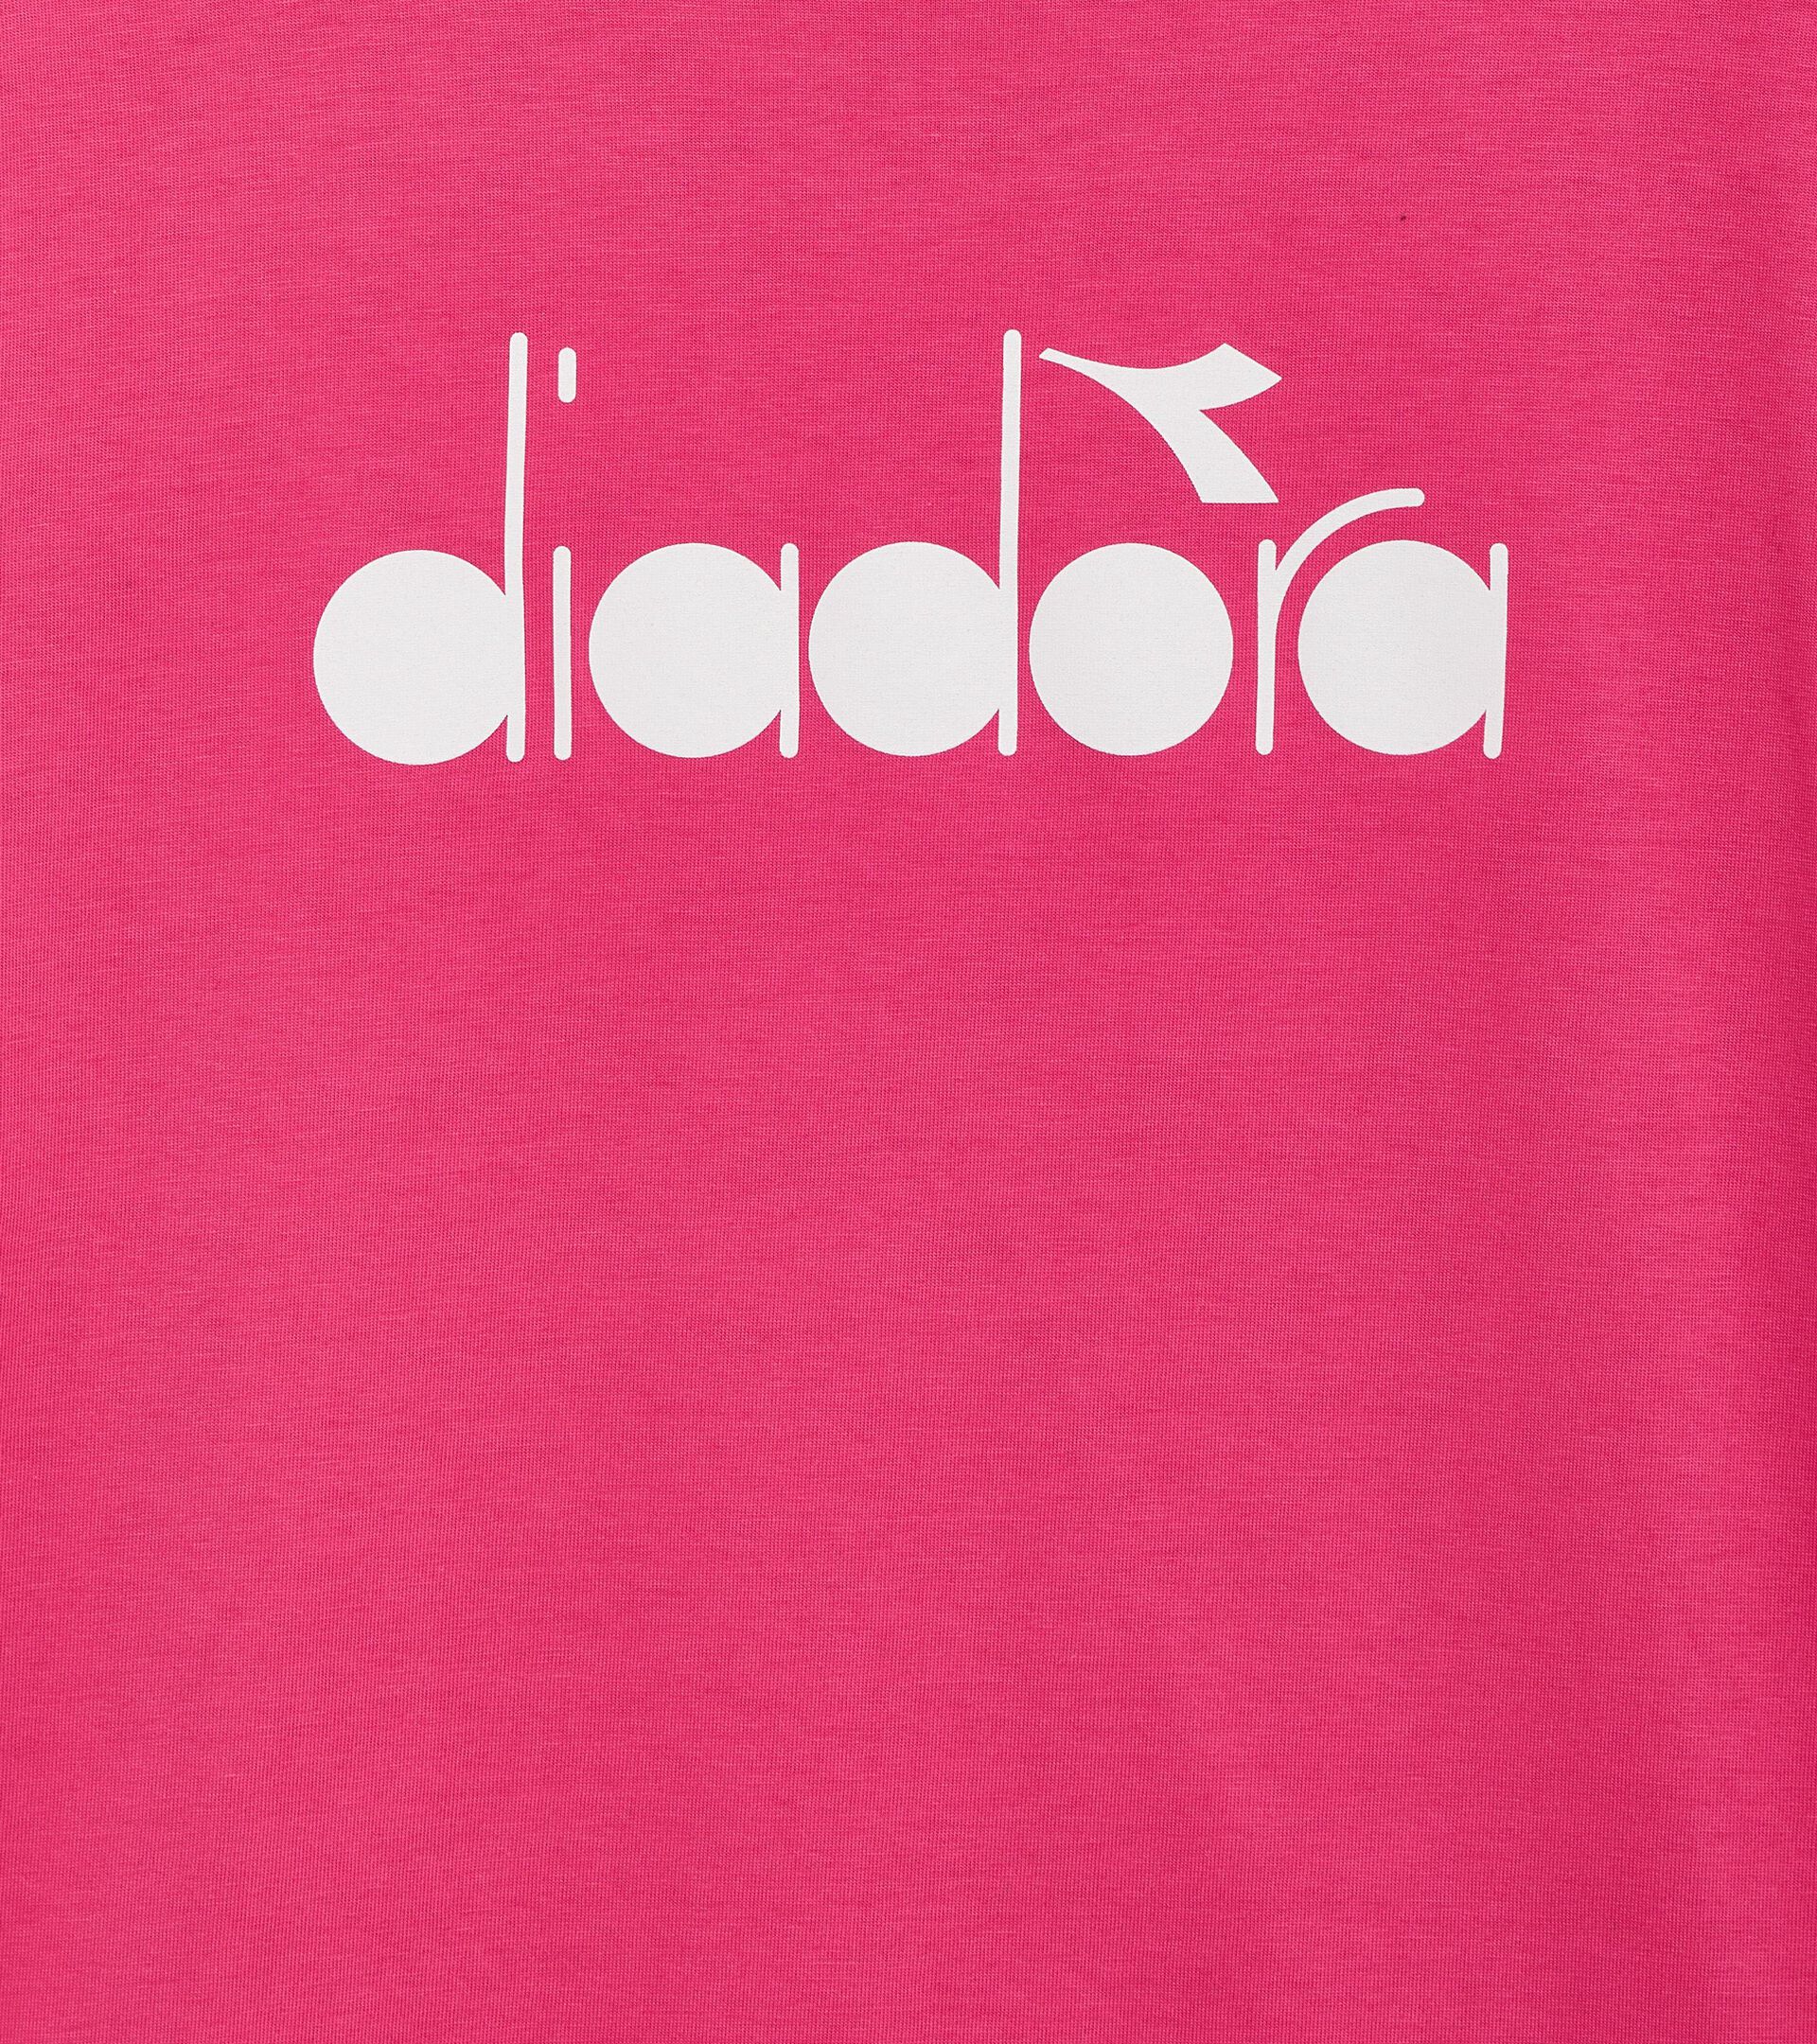 T-shirt - Made in Italy - Gender Neutral T-SHIRT SS LOGO ROSA SORBETTO - Diadora